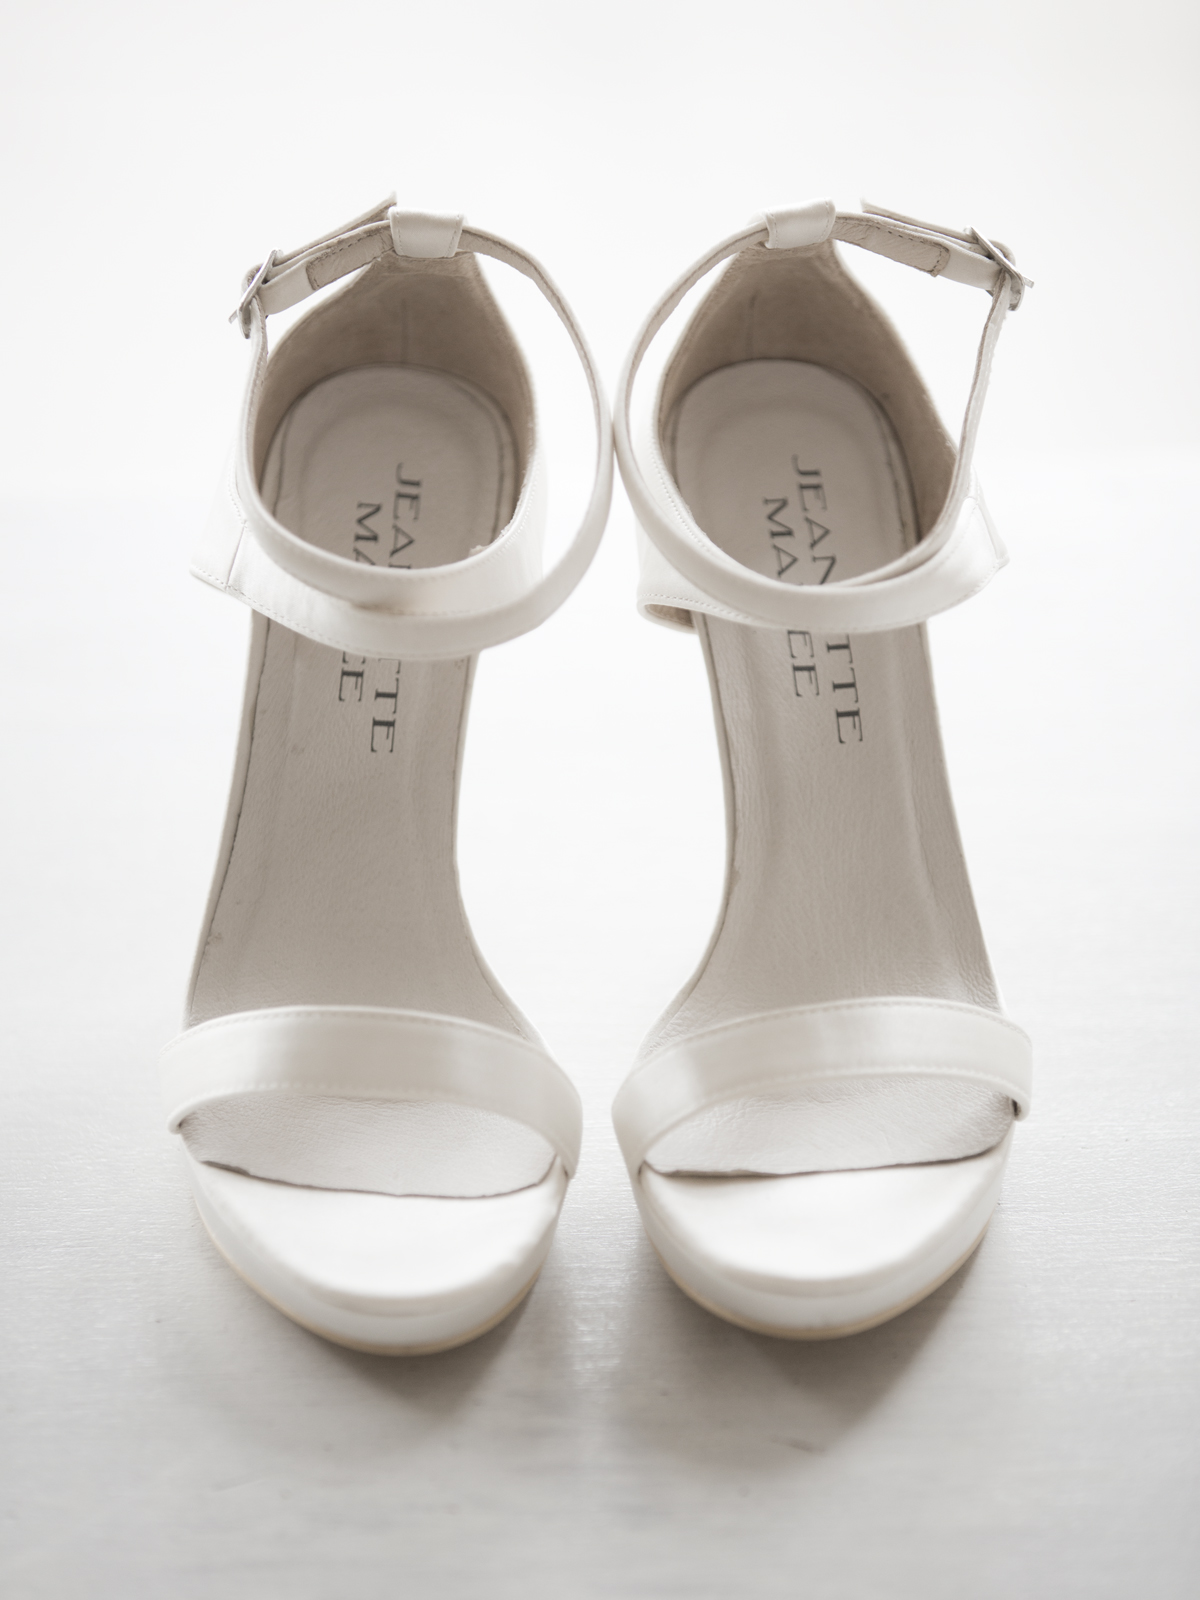 Ivory Bridal Shoes | Uma I Jeanette Maree |Shop